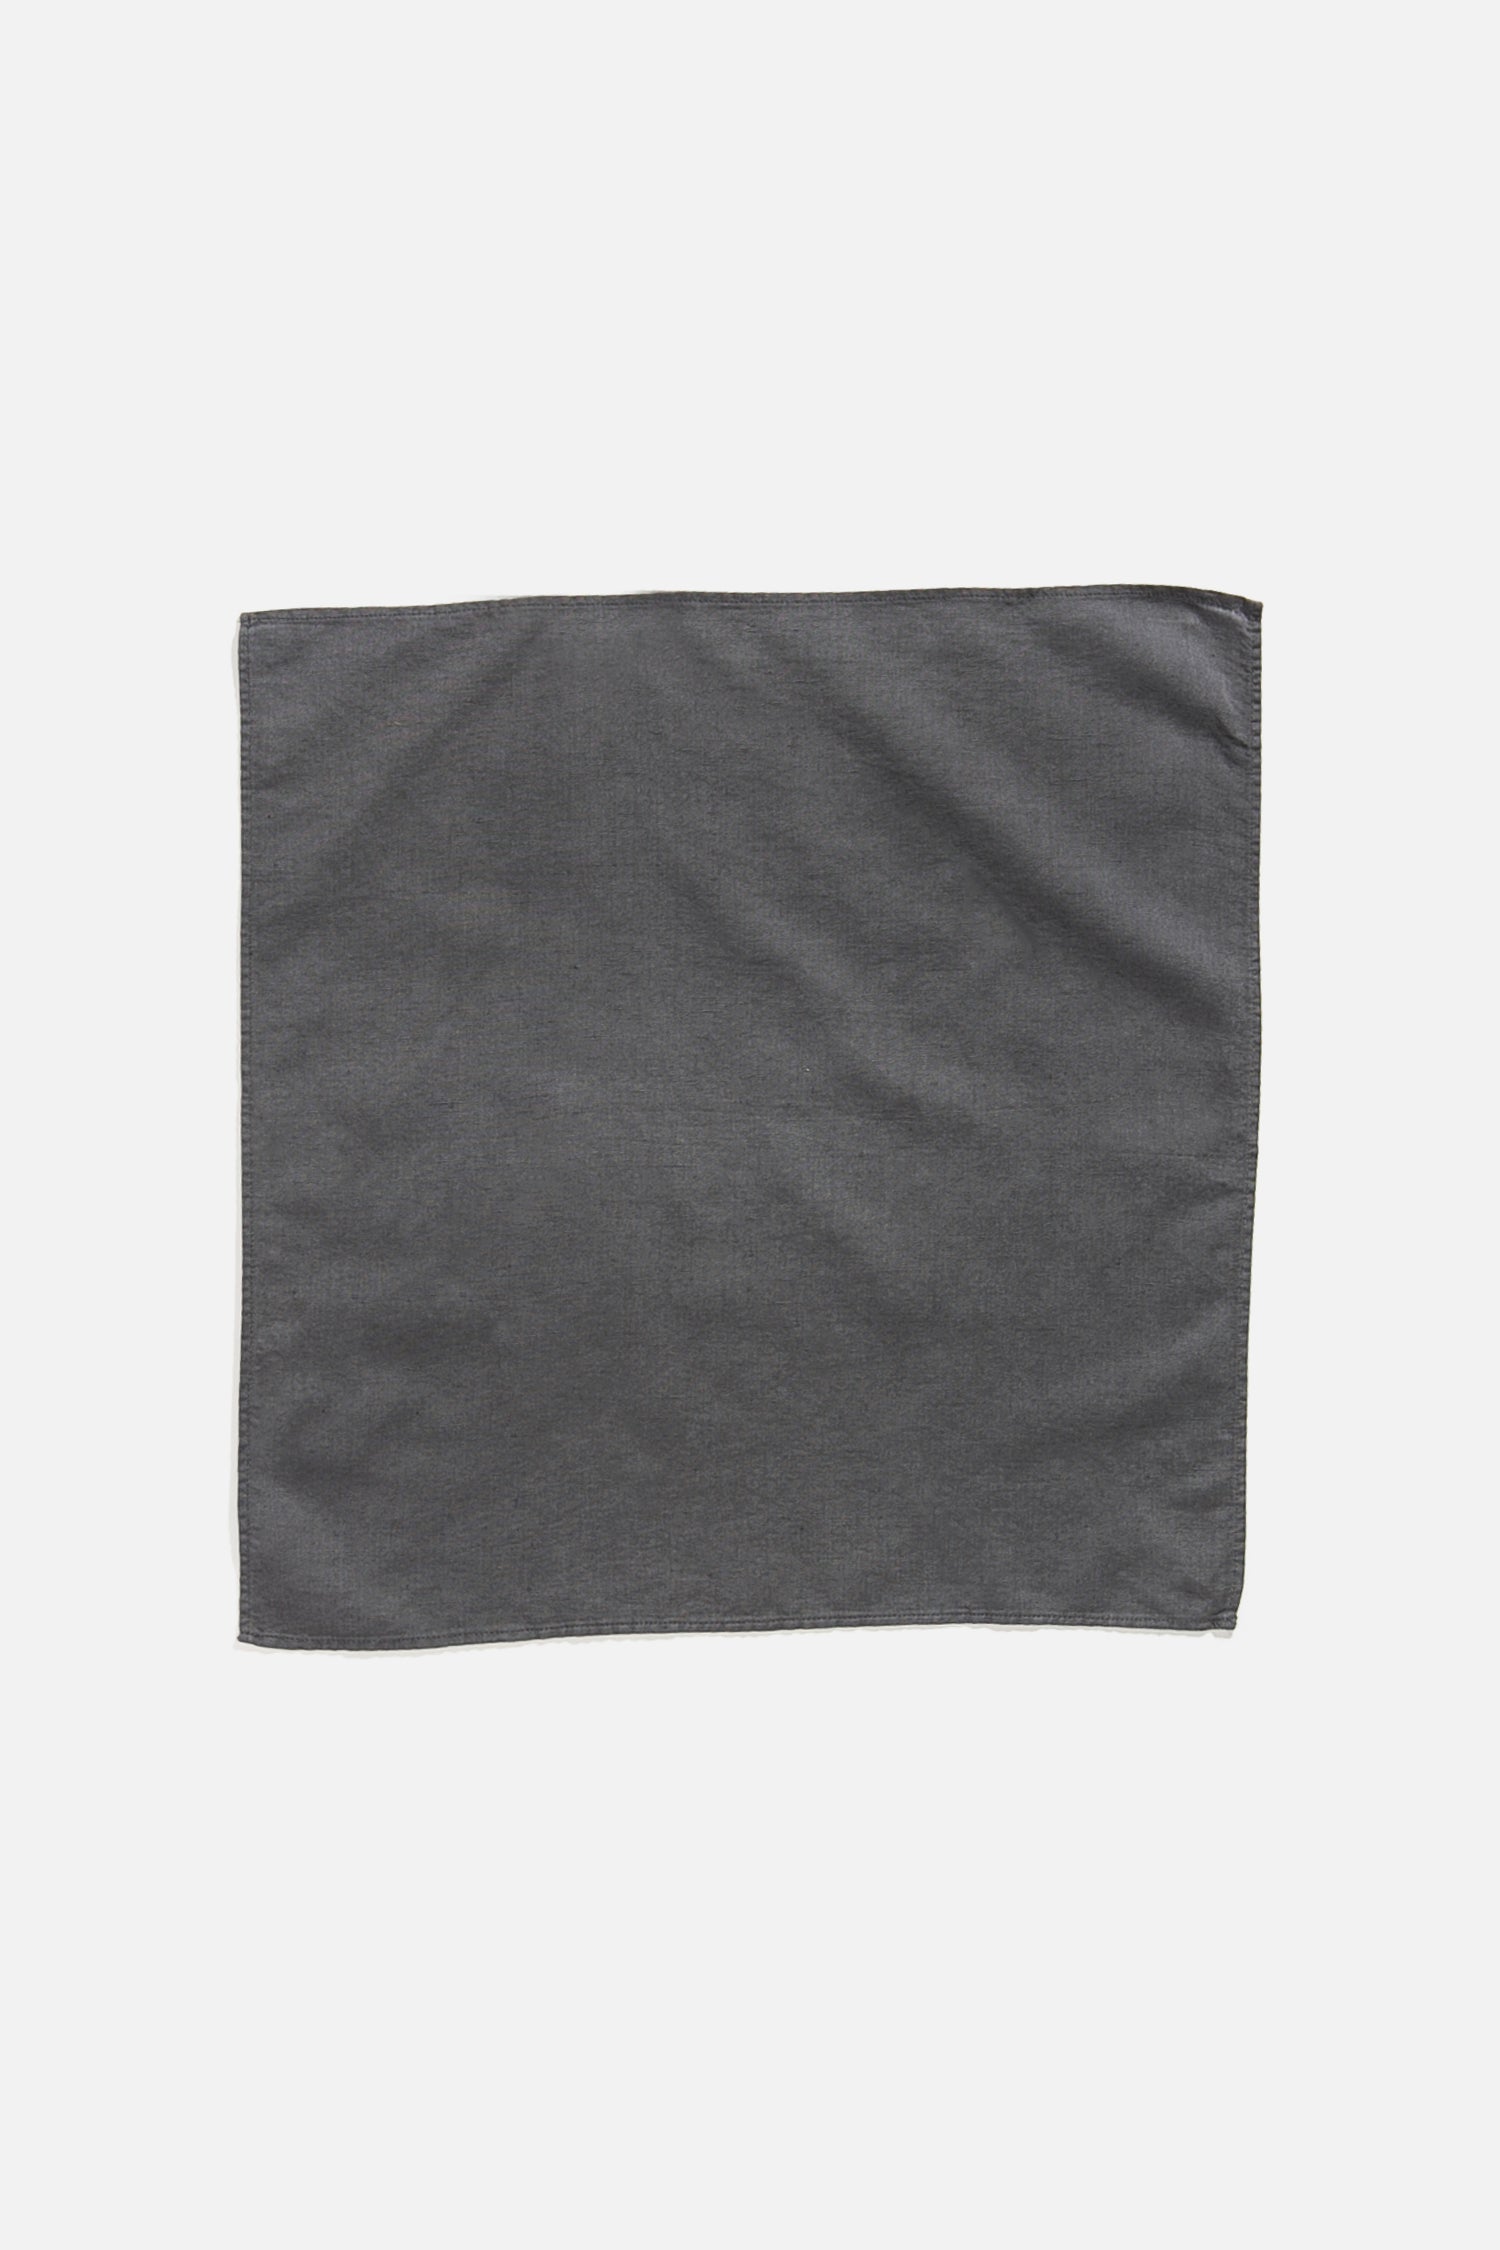 Bandana / Grey Garment Dye